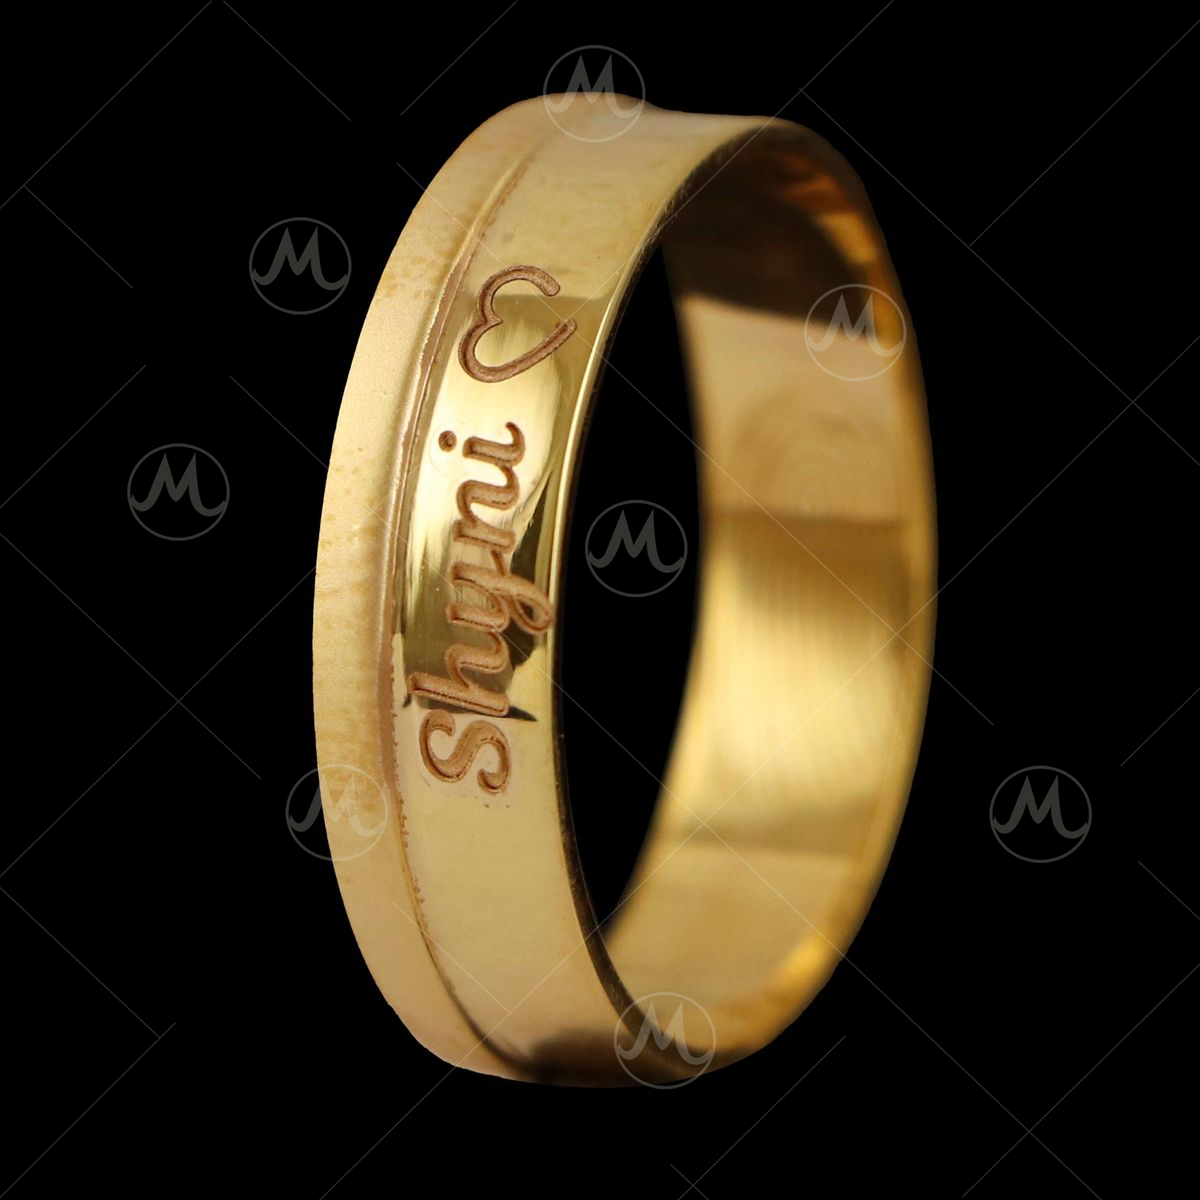 kerala wedding ring models with name